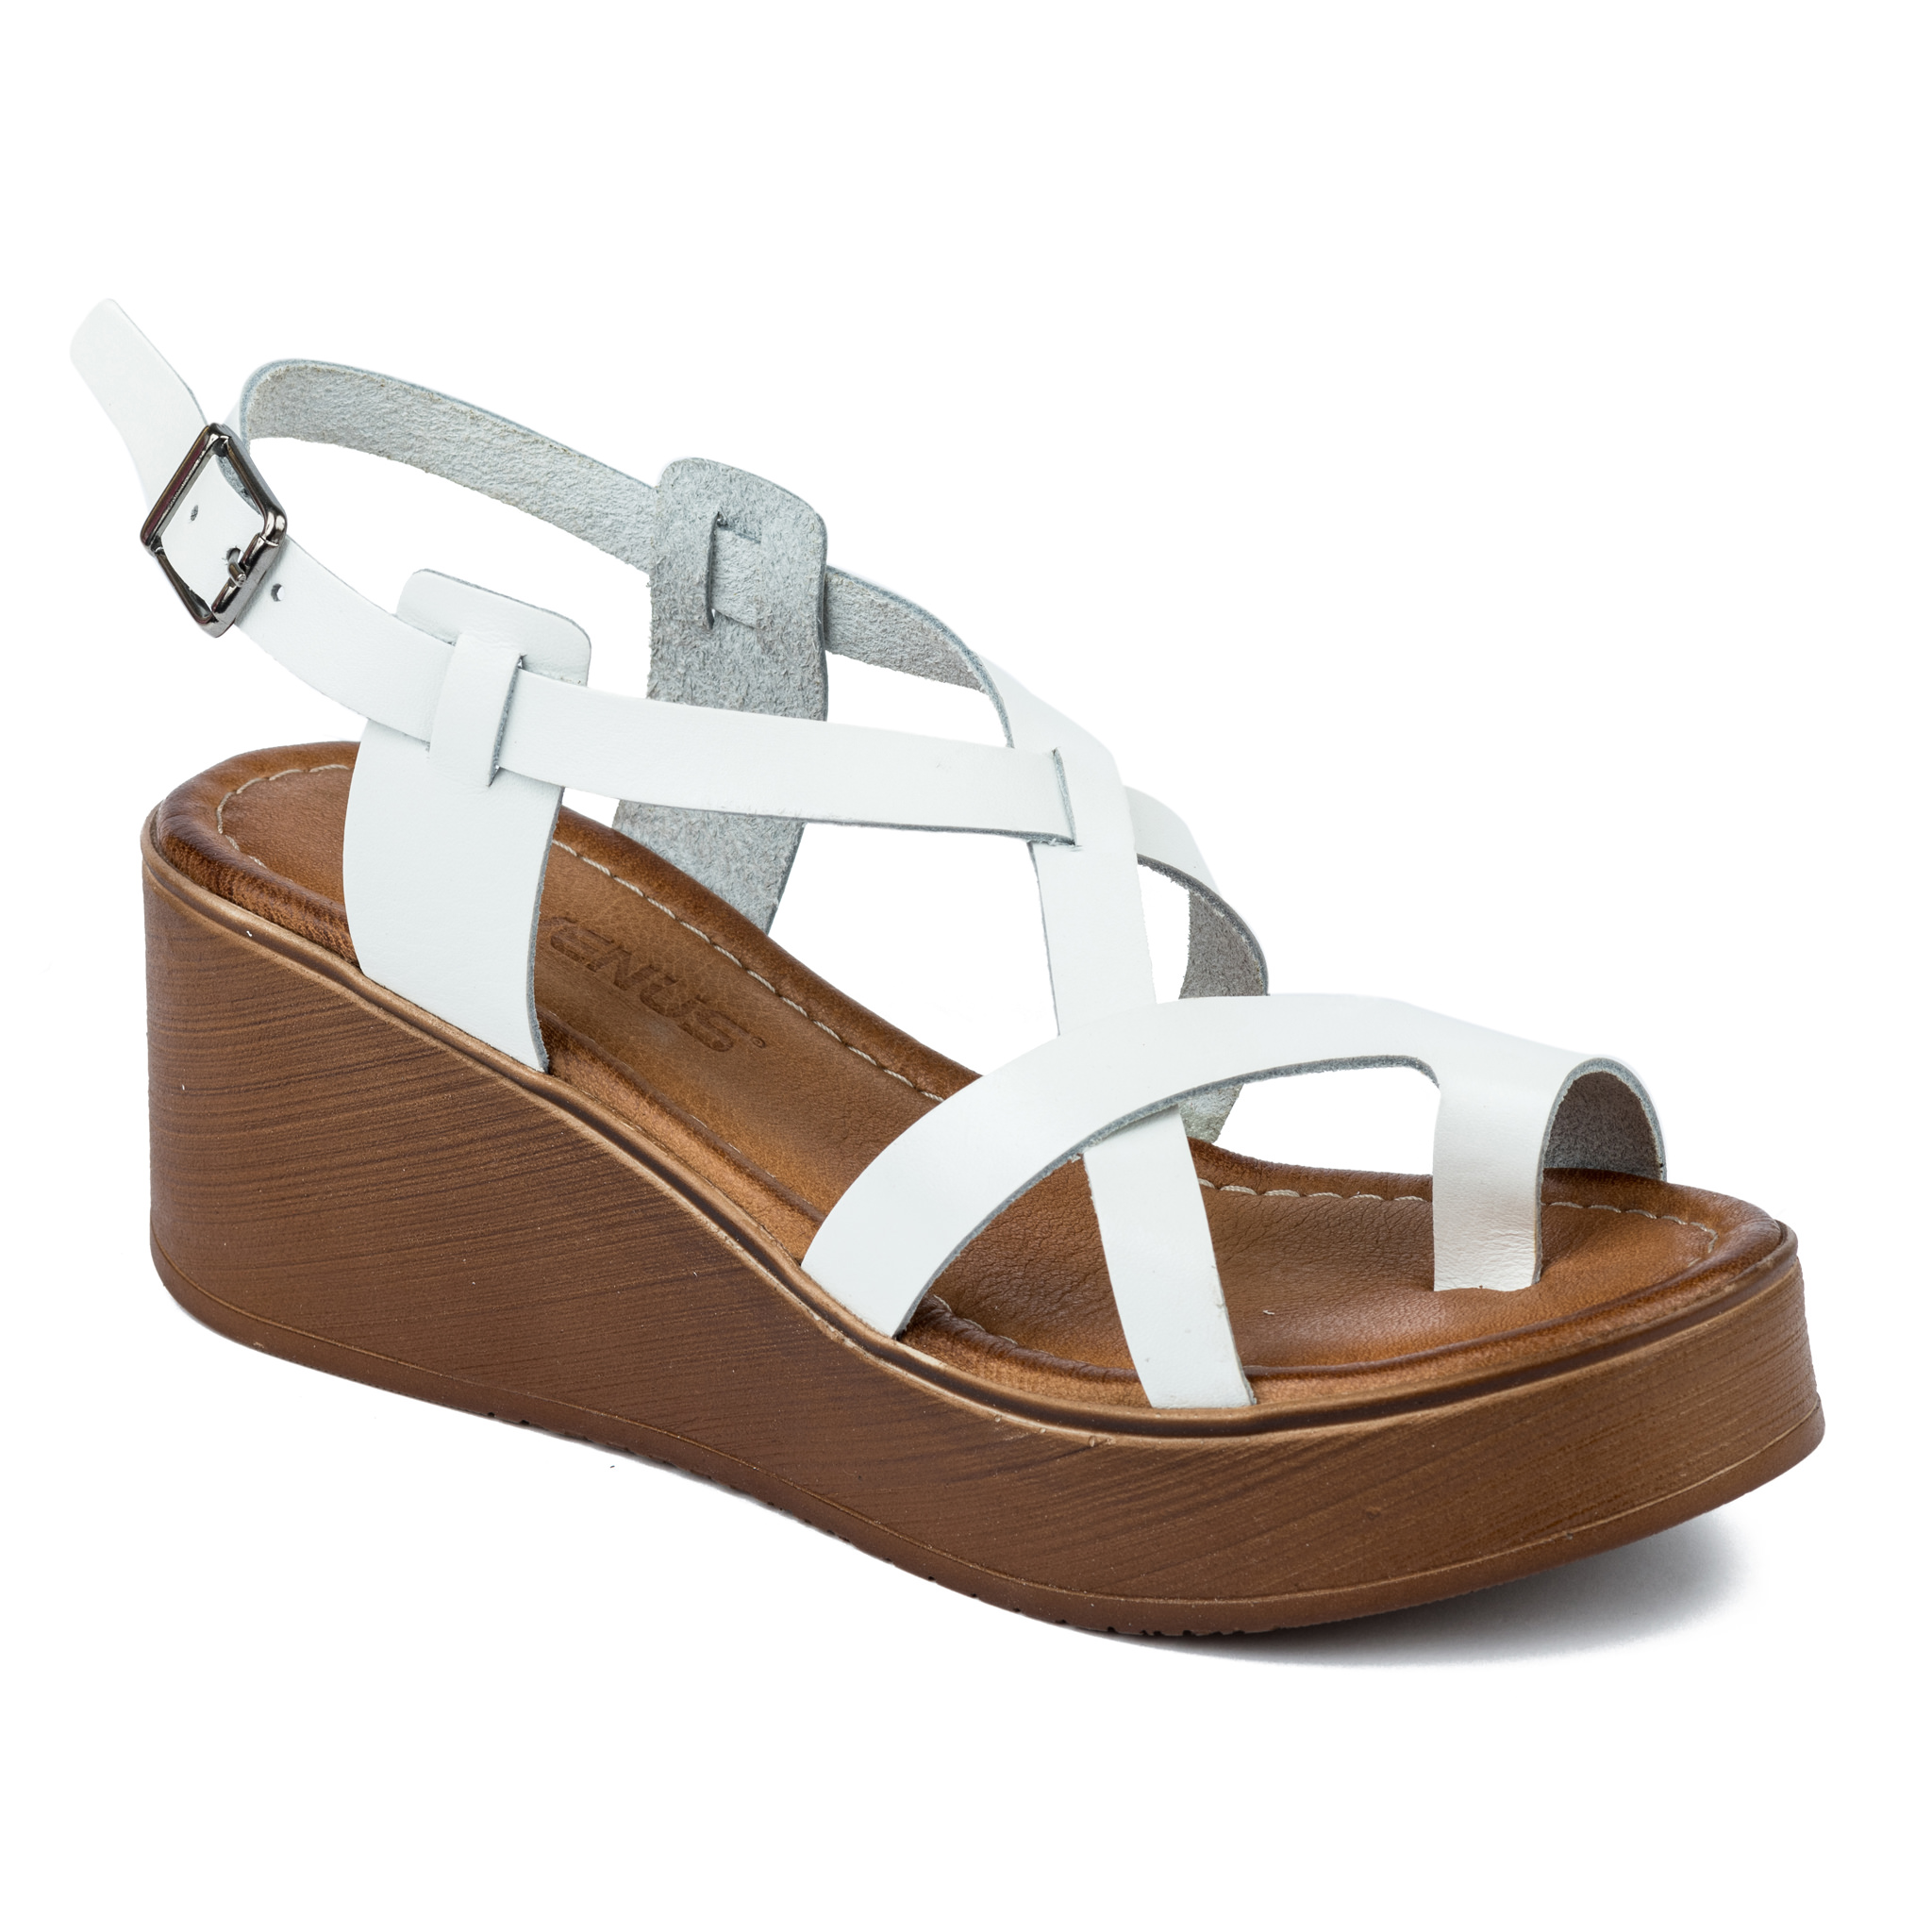 Women sandals A230 - WHITE